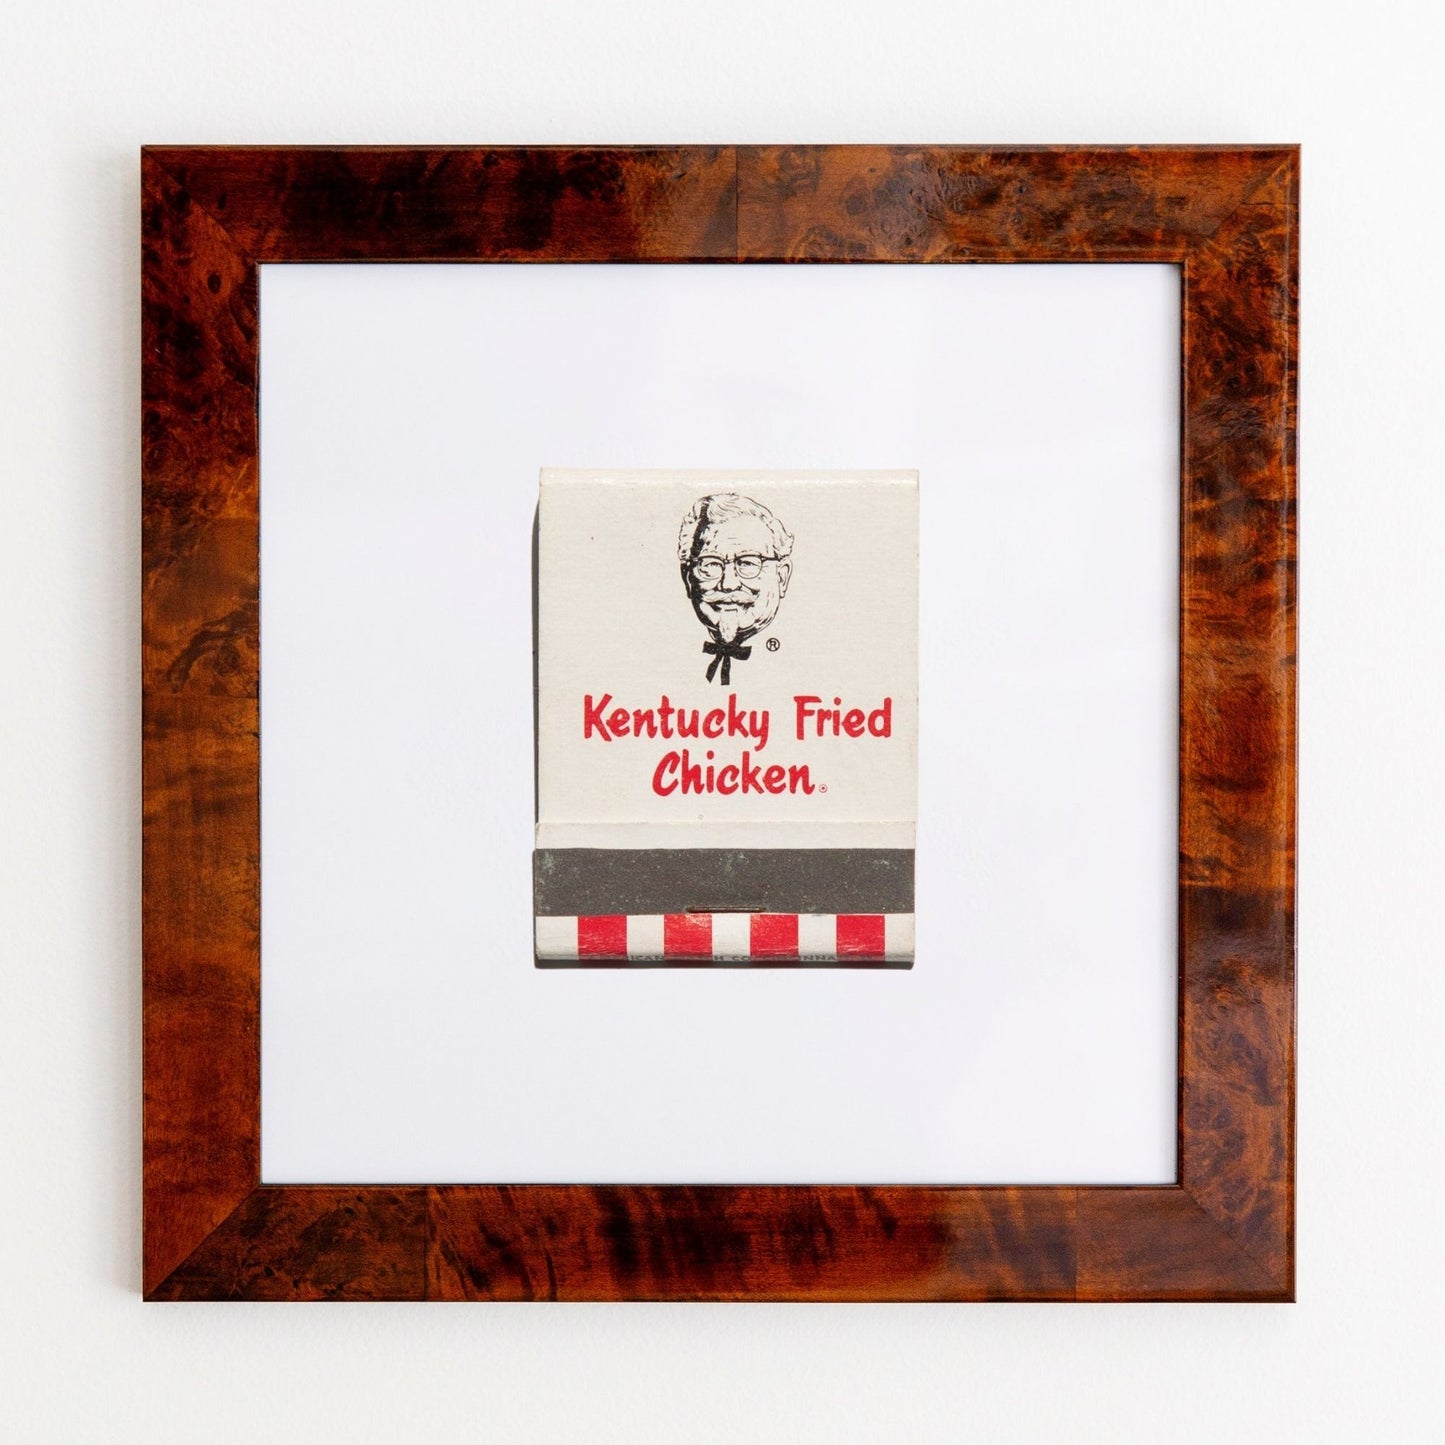 Kentucky Fried Chicken (Back)